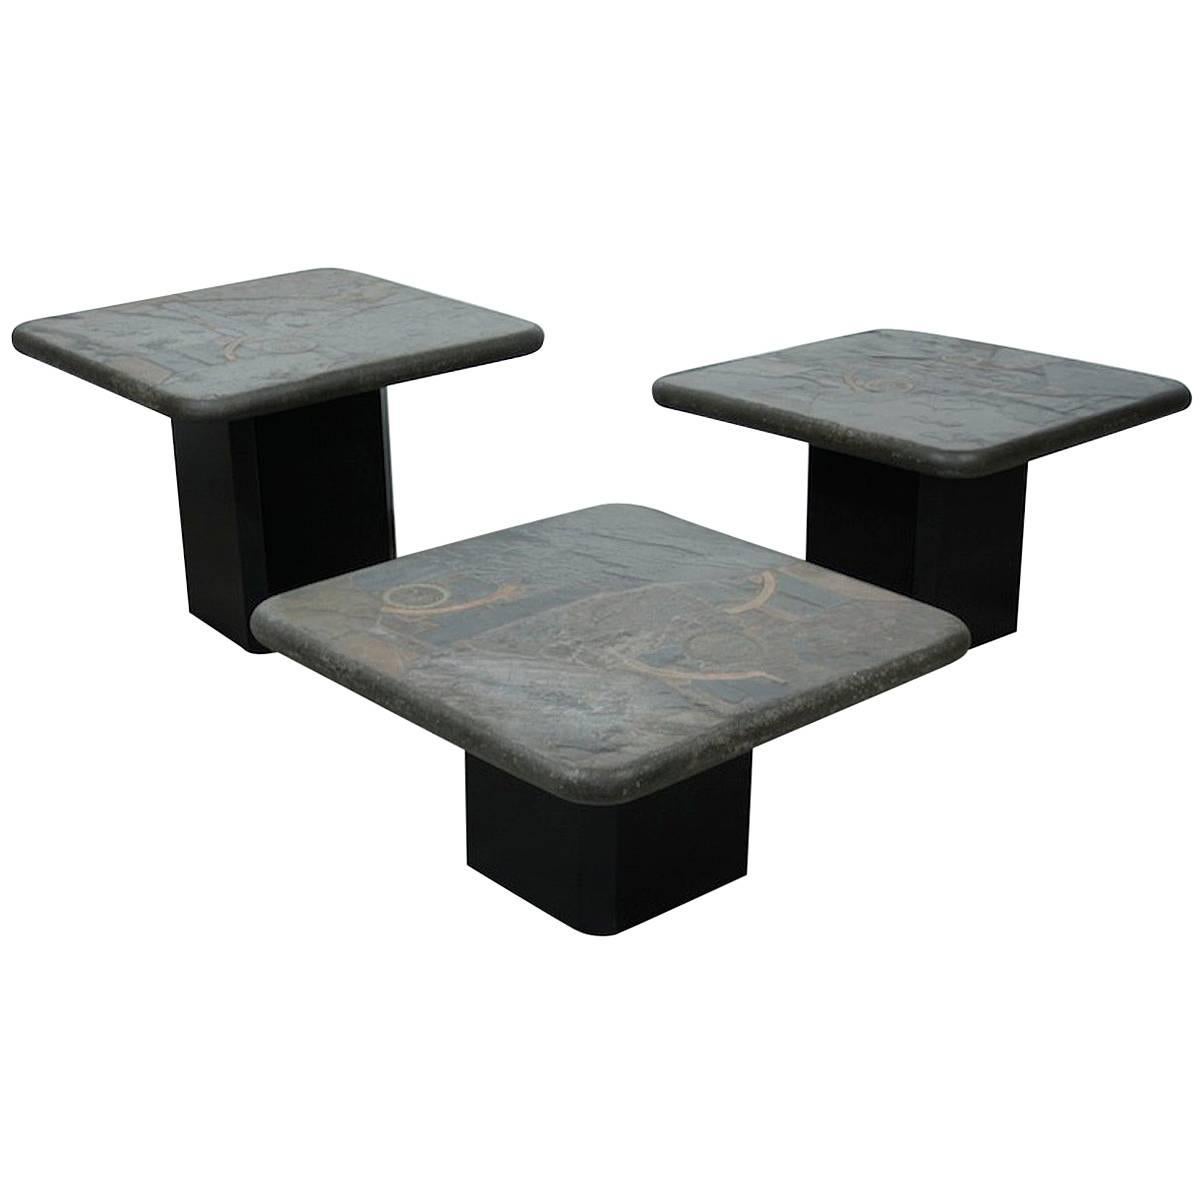 Trio of Marcus Kingma Brutalist Stone Coffee Tables, Dutch Design, 1970s For Sale